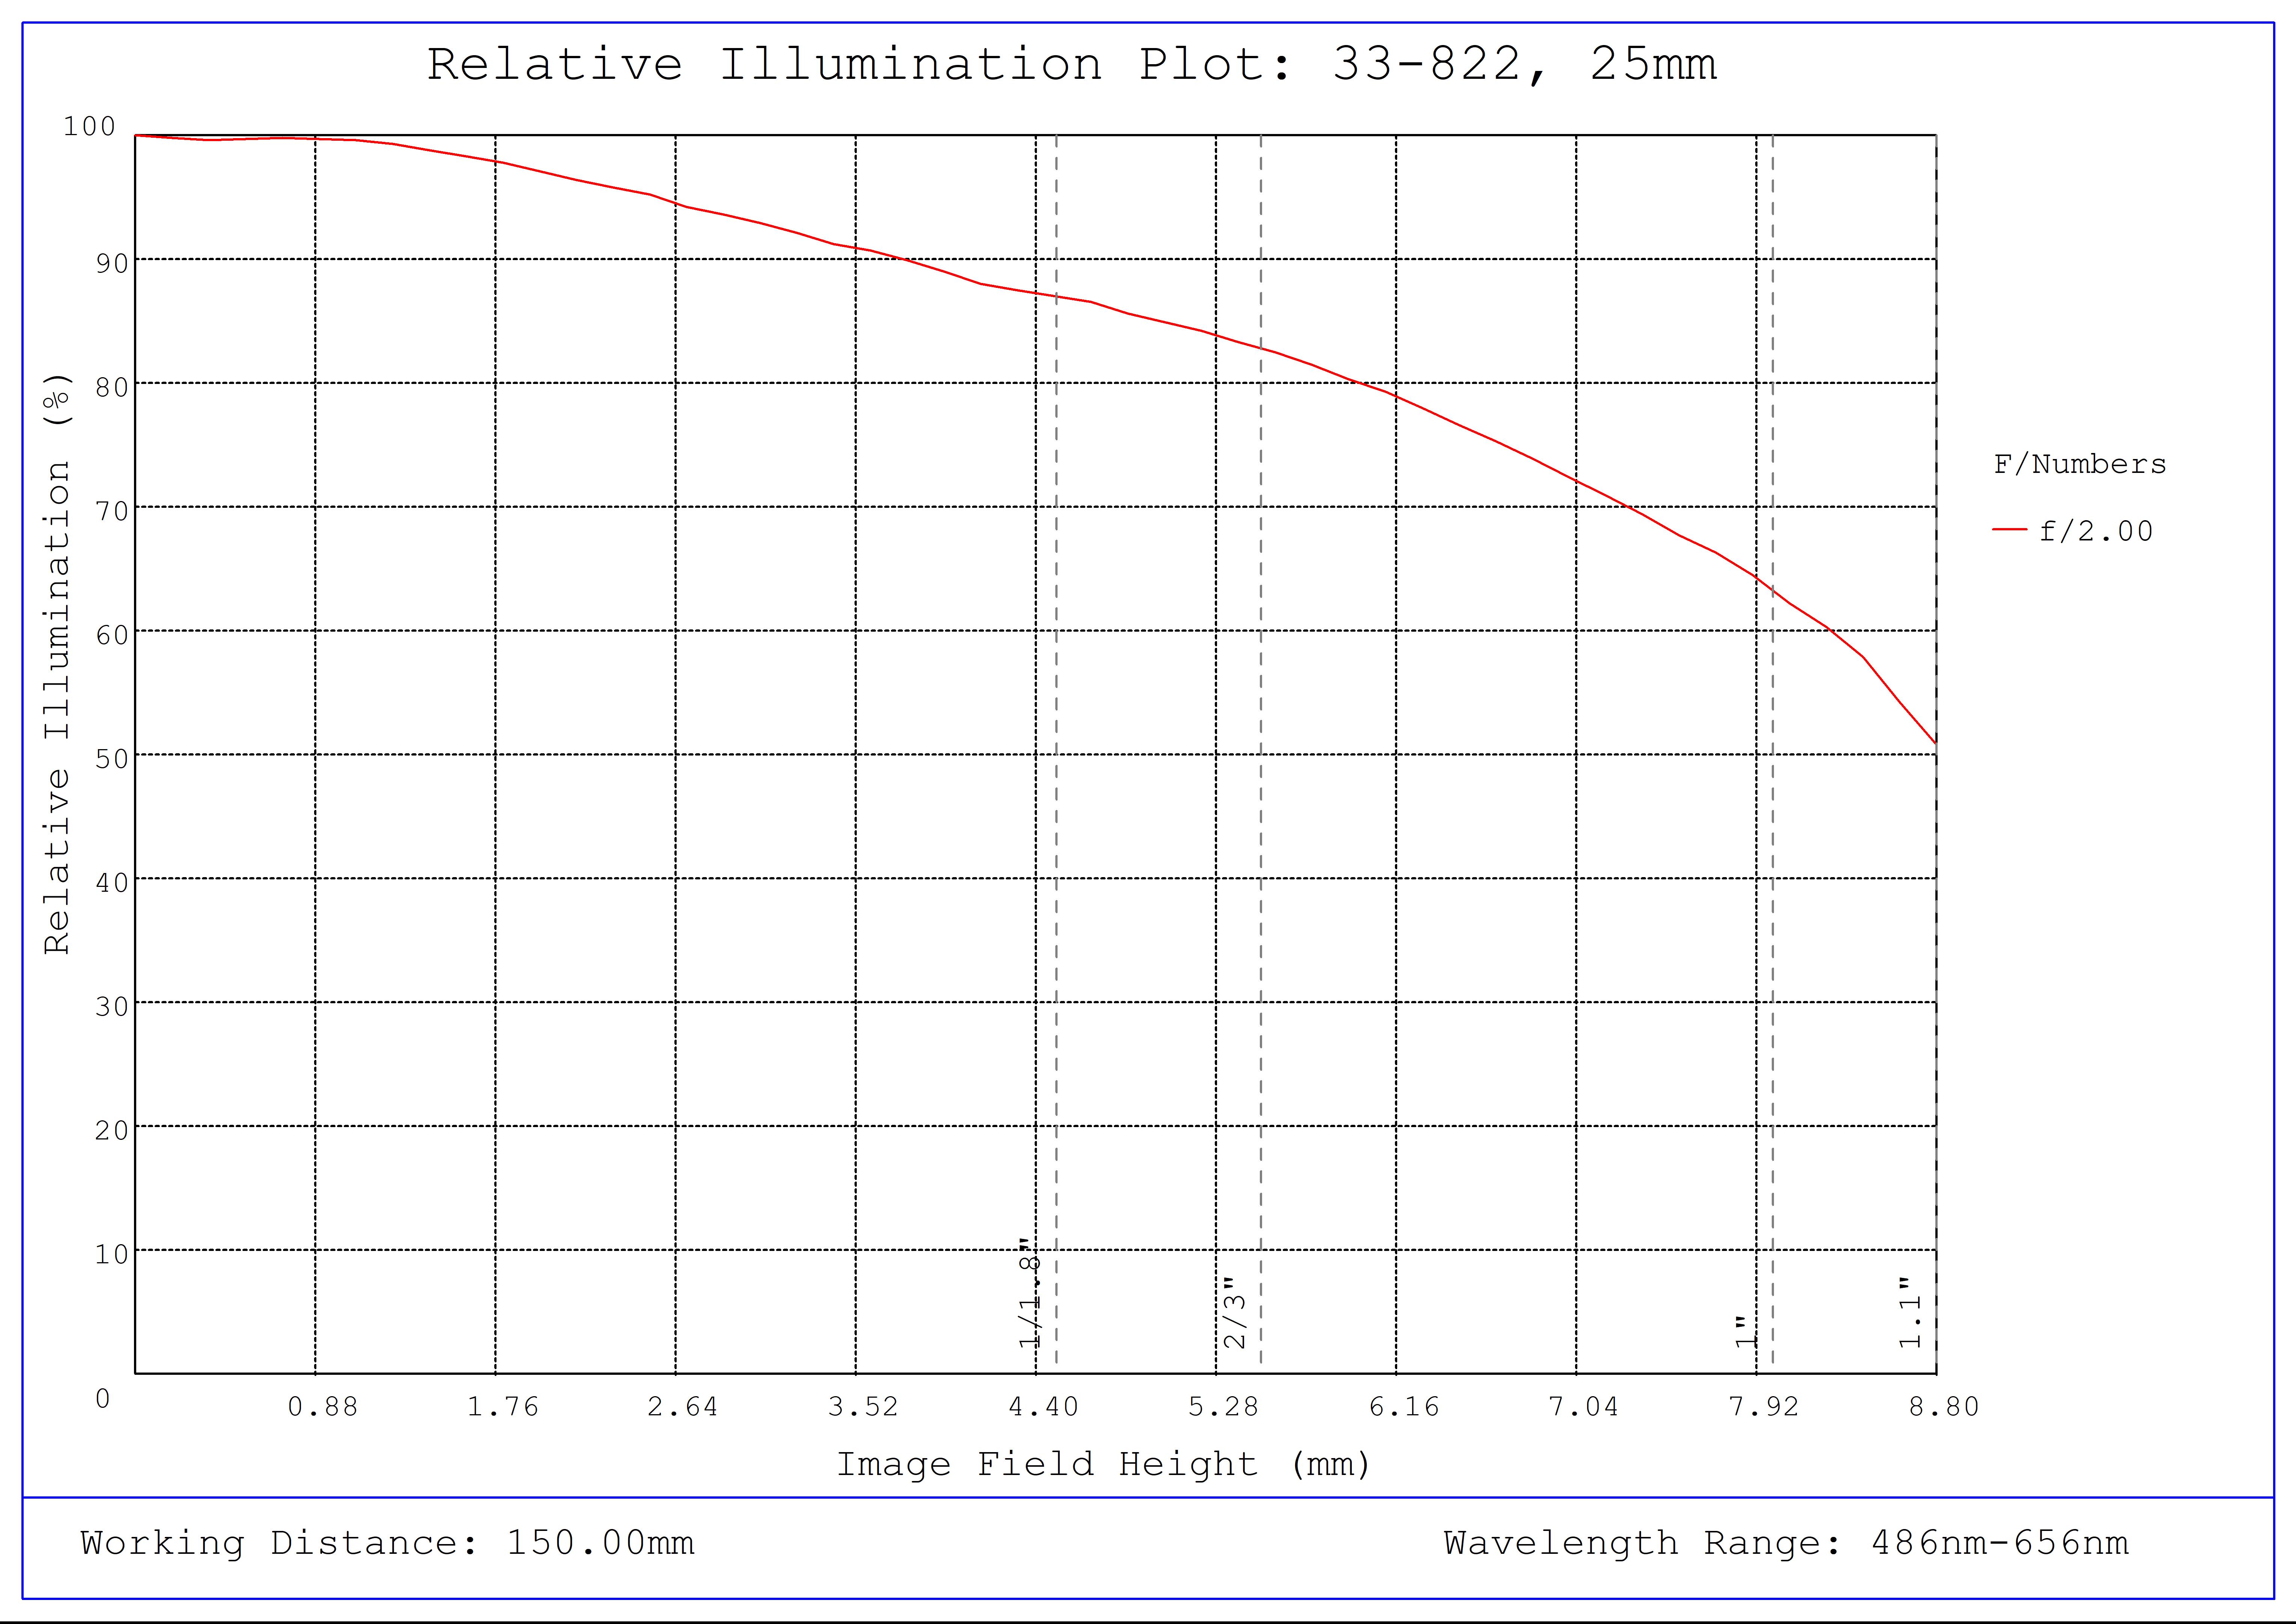 #33-822, 25mm f/2.0, HPi Series Fixed Focal Length Lens, Relative Illumination Plot